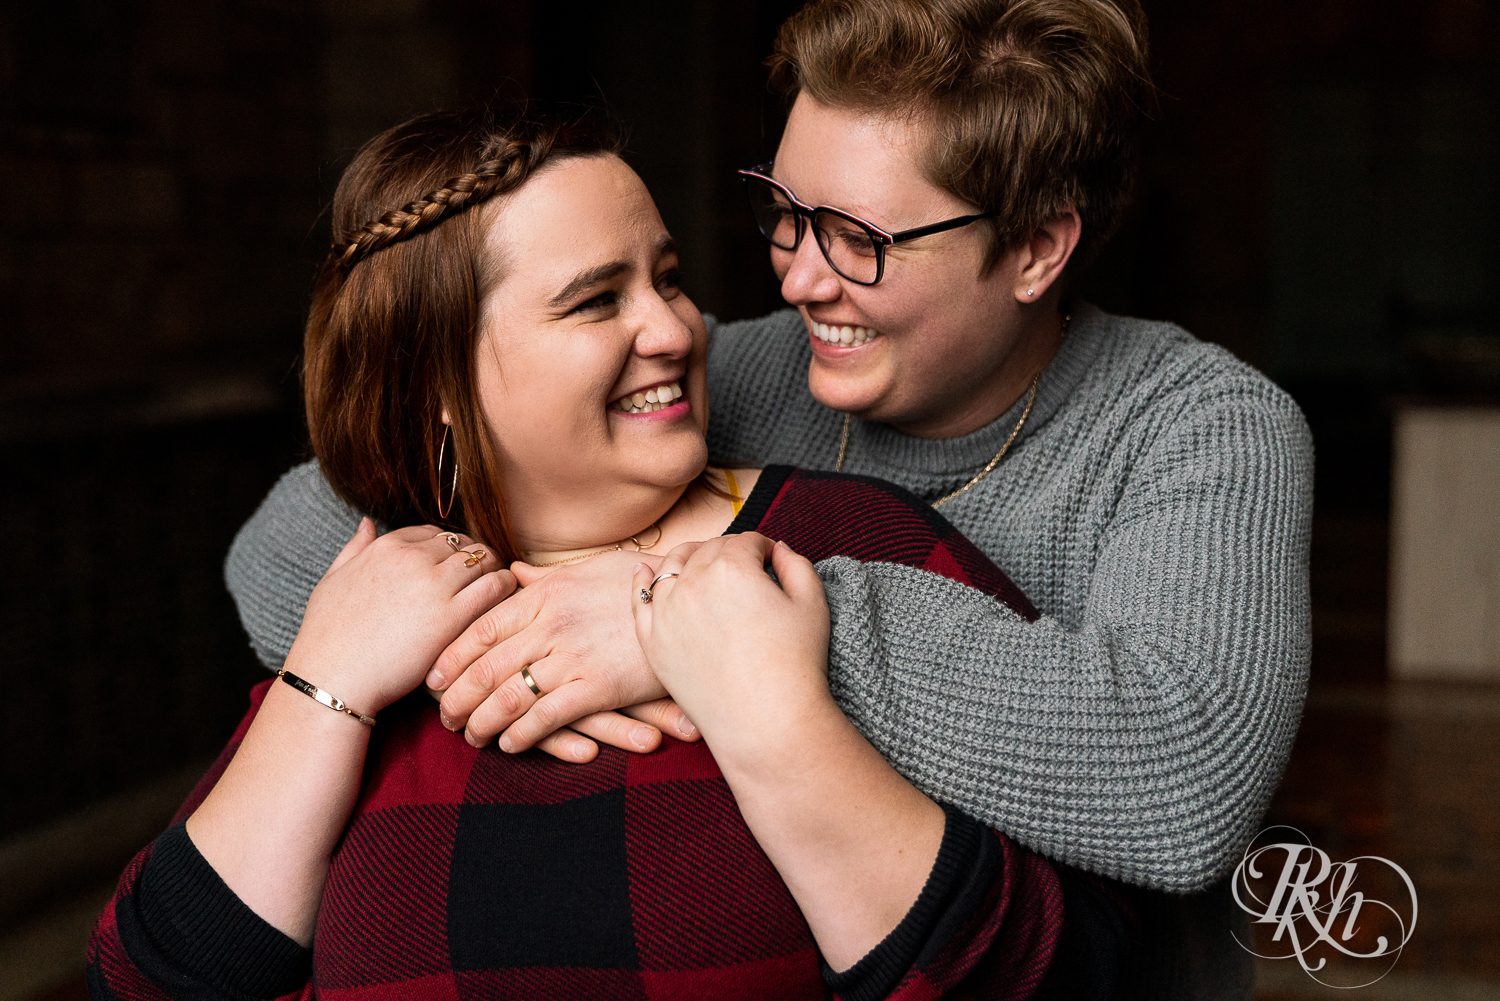 Lesbian couple kiss and laugh in Saint Catherine's in Saint Paul, Minnesota. 